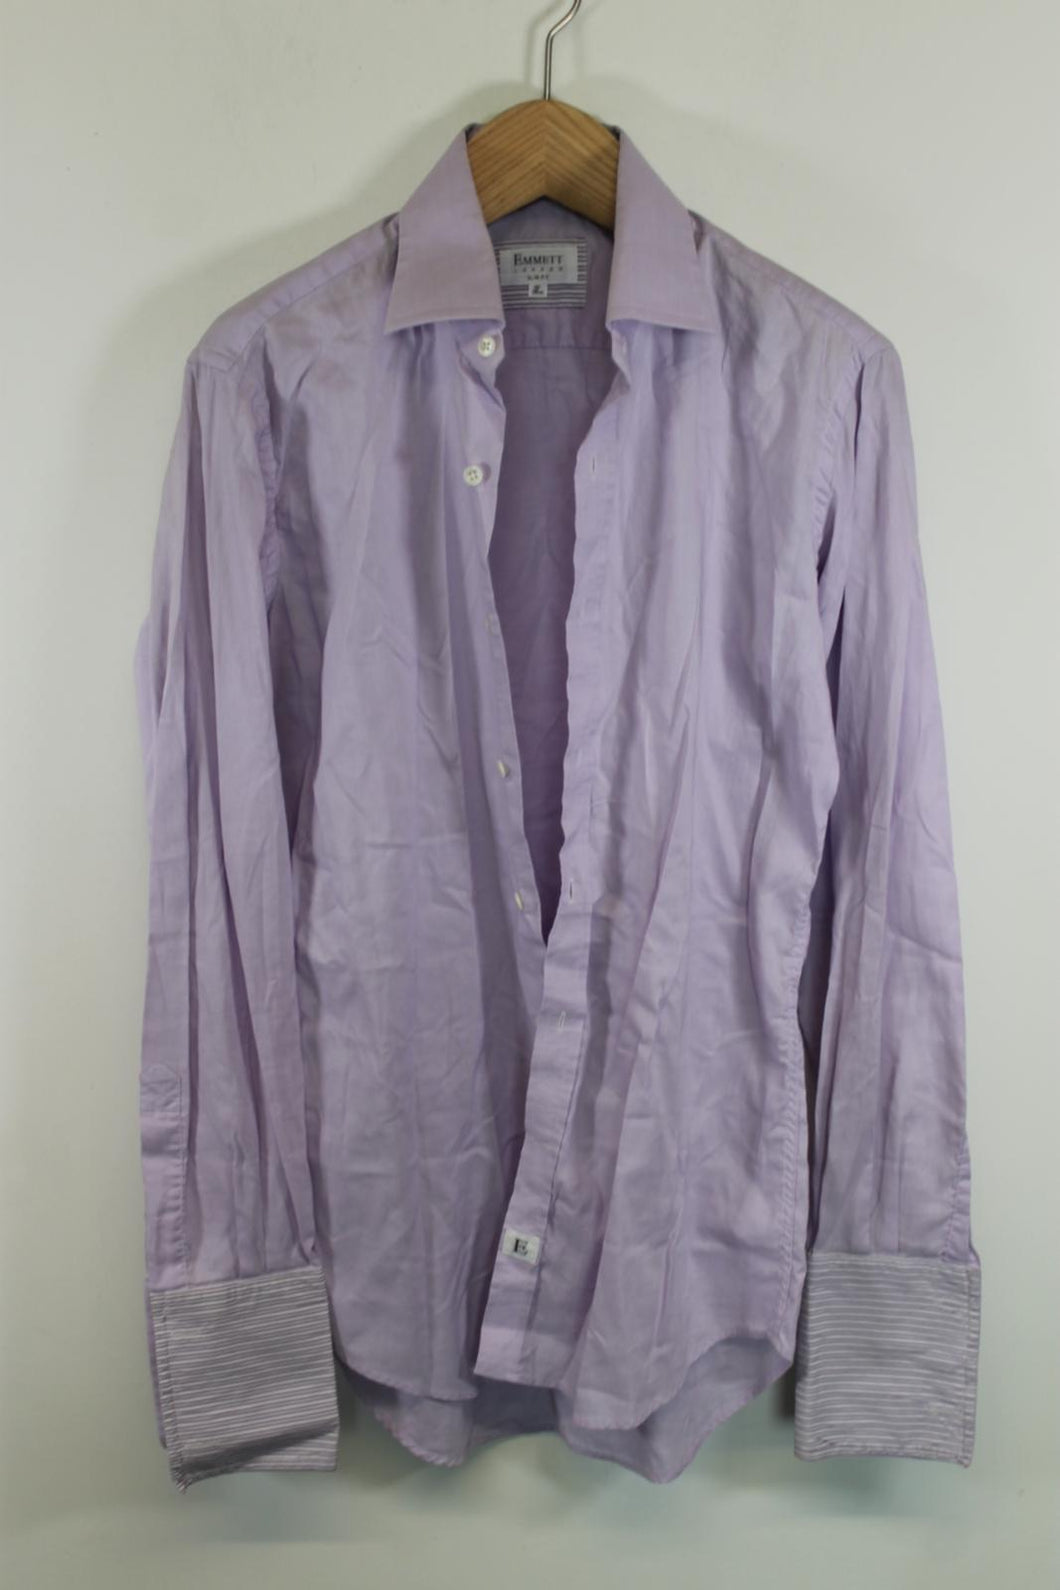 EMMETT LONDON Men's Lavender Long Sleeve Slim Fit Button Down Shirt Size 15